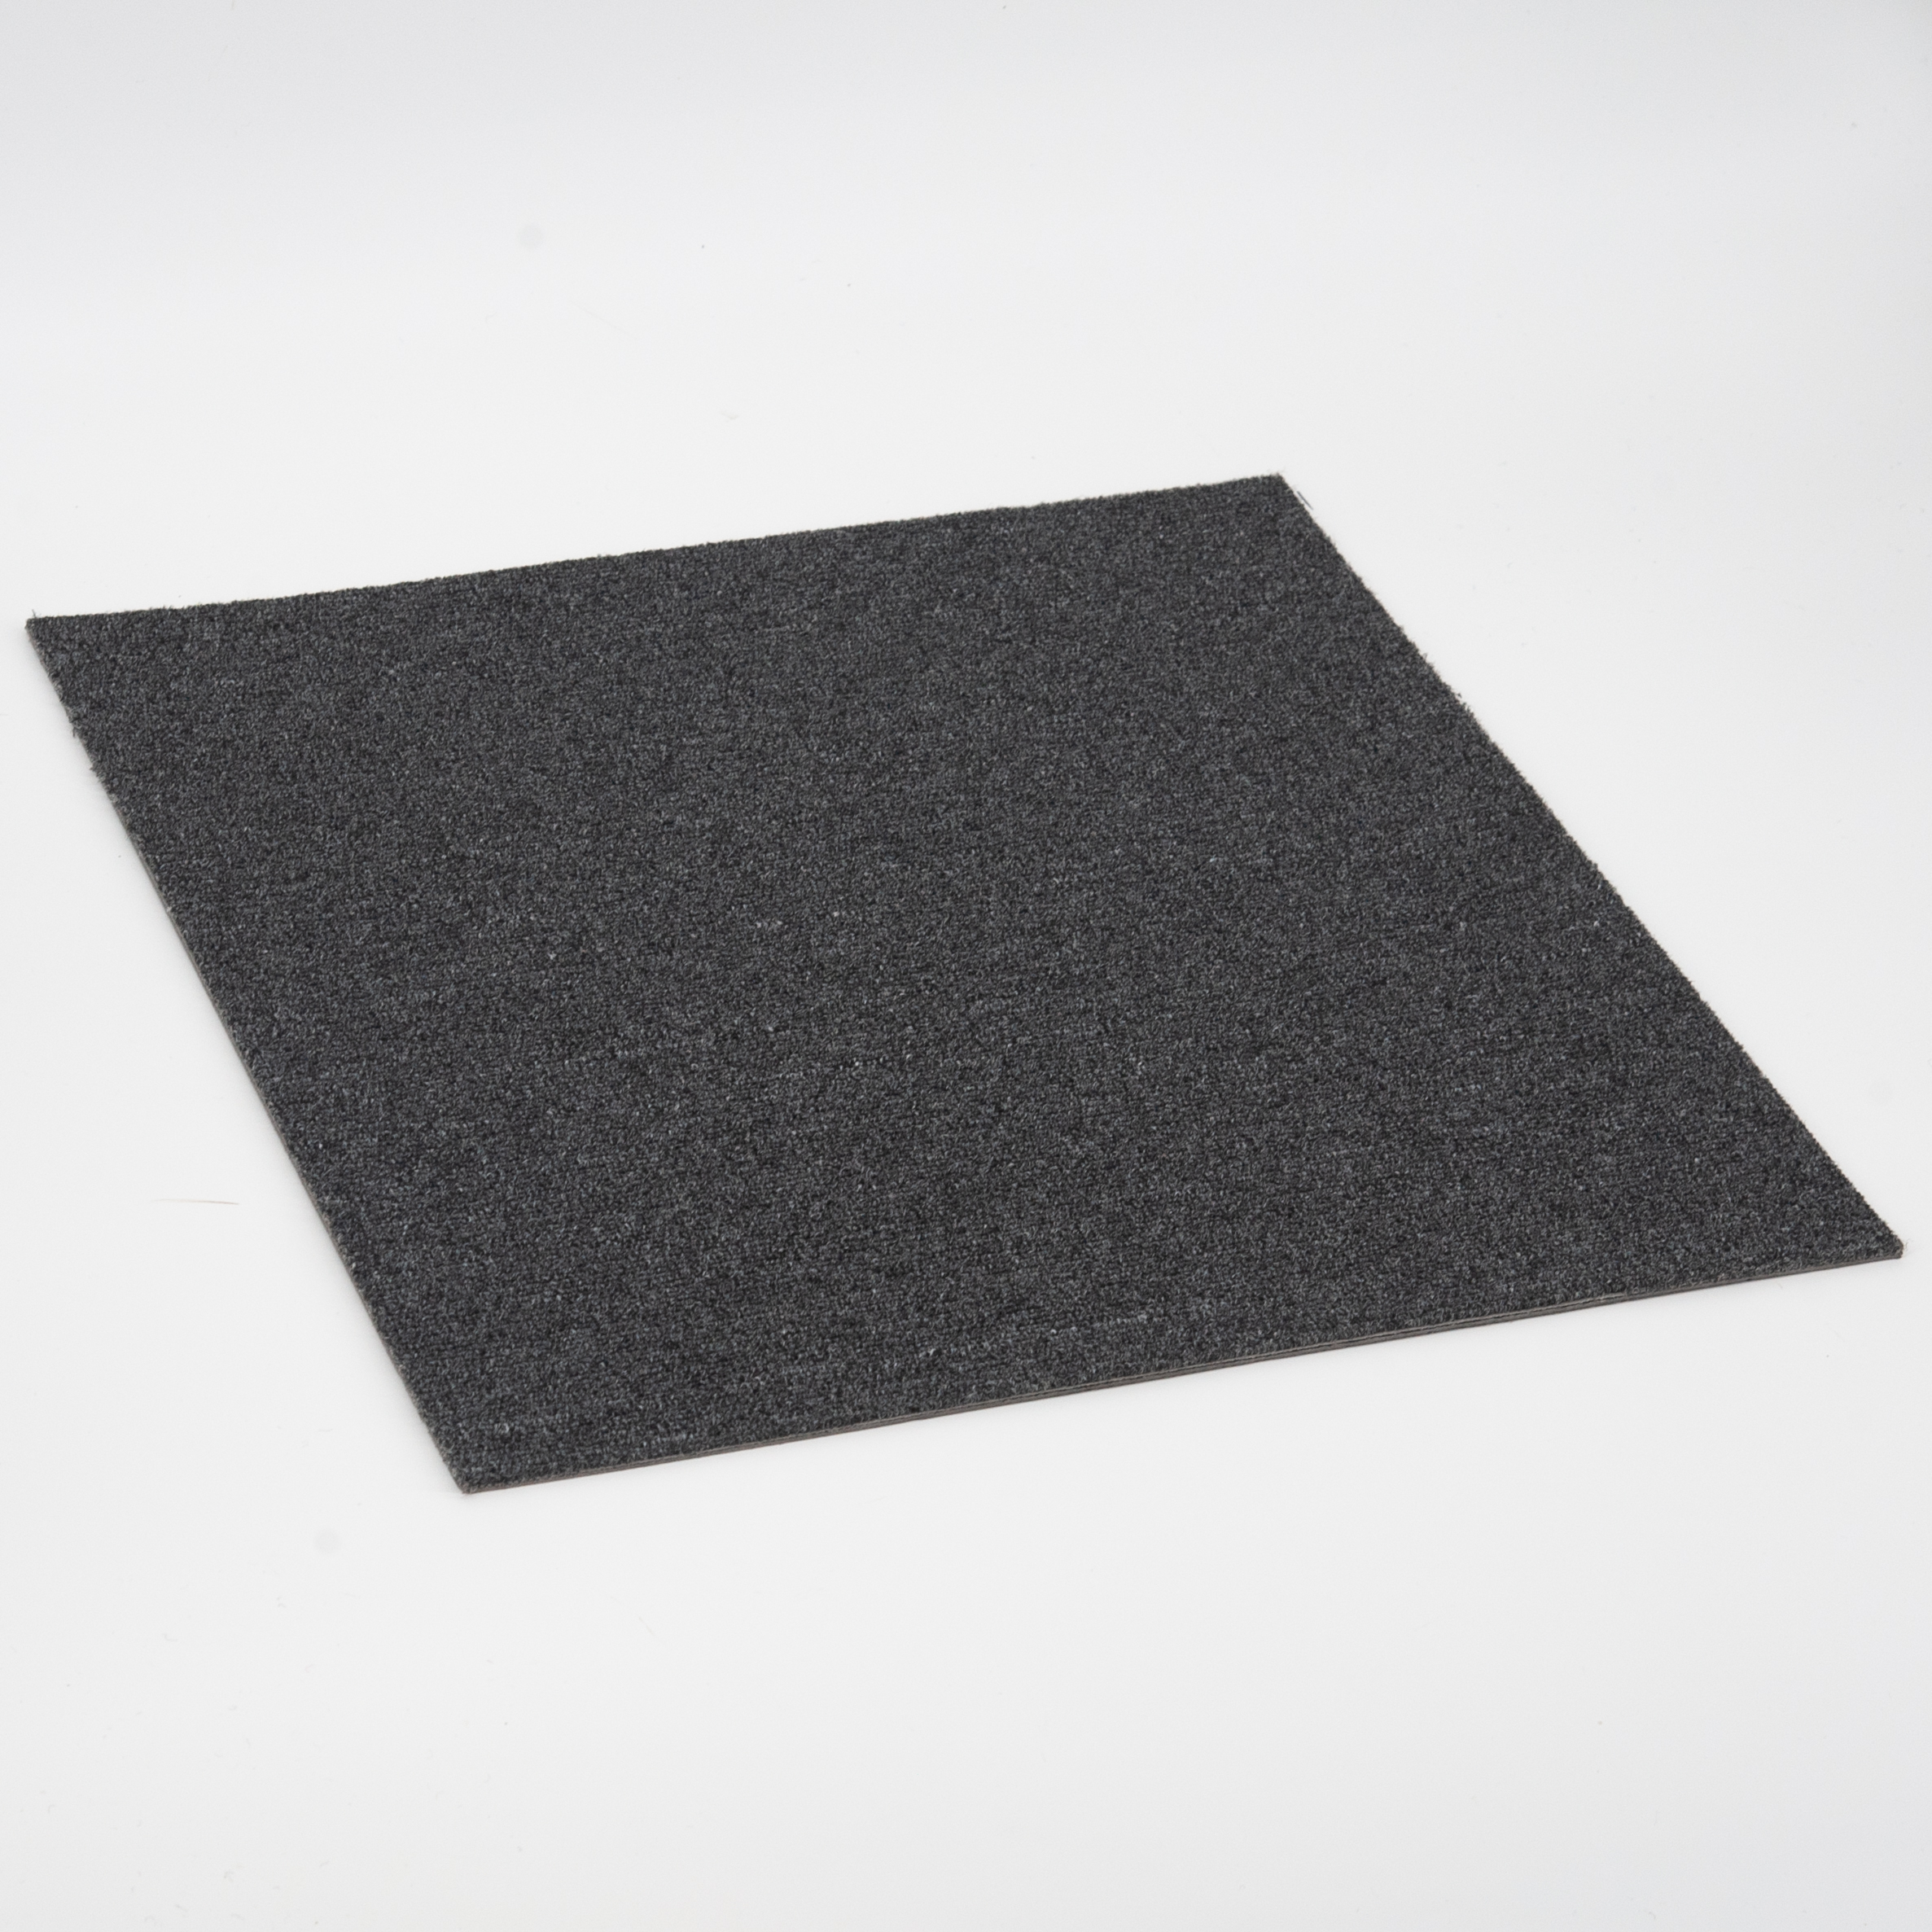 Self Adhesive Quality Carpet Tiles With Padding